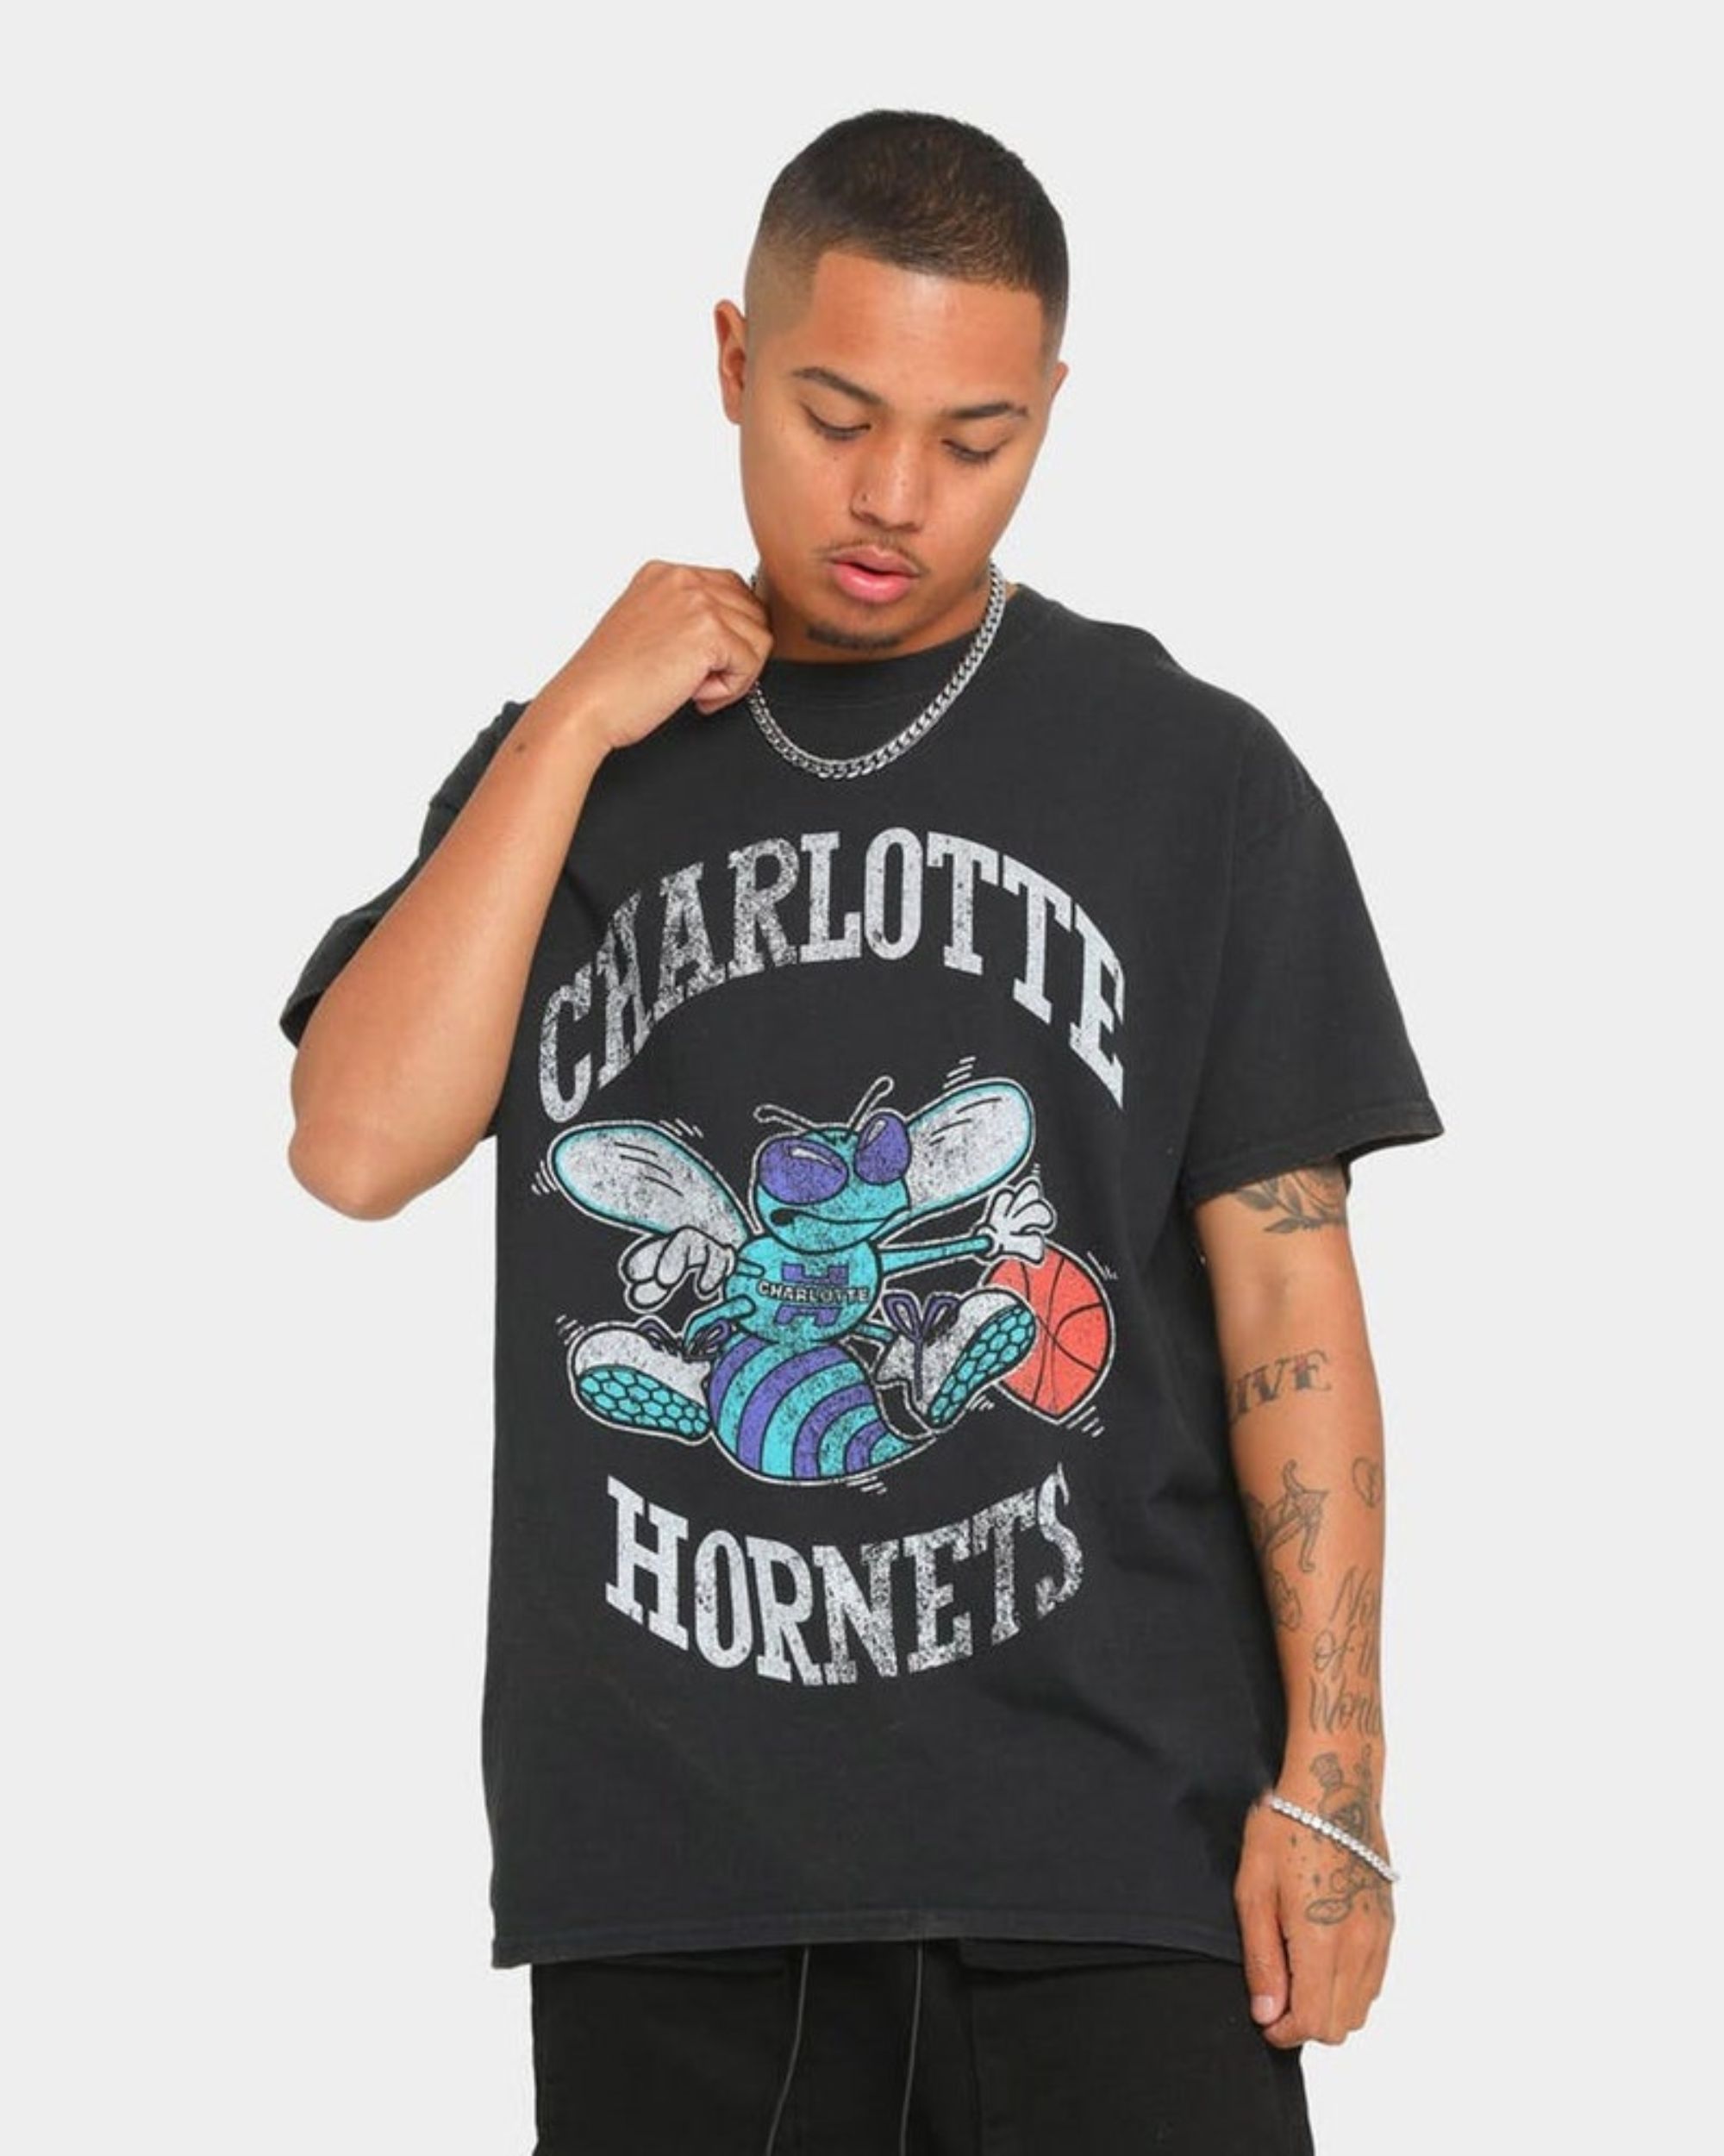 hornets vintage shirt